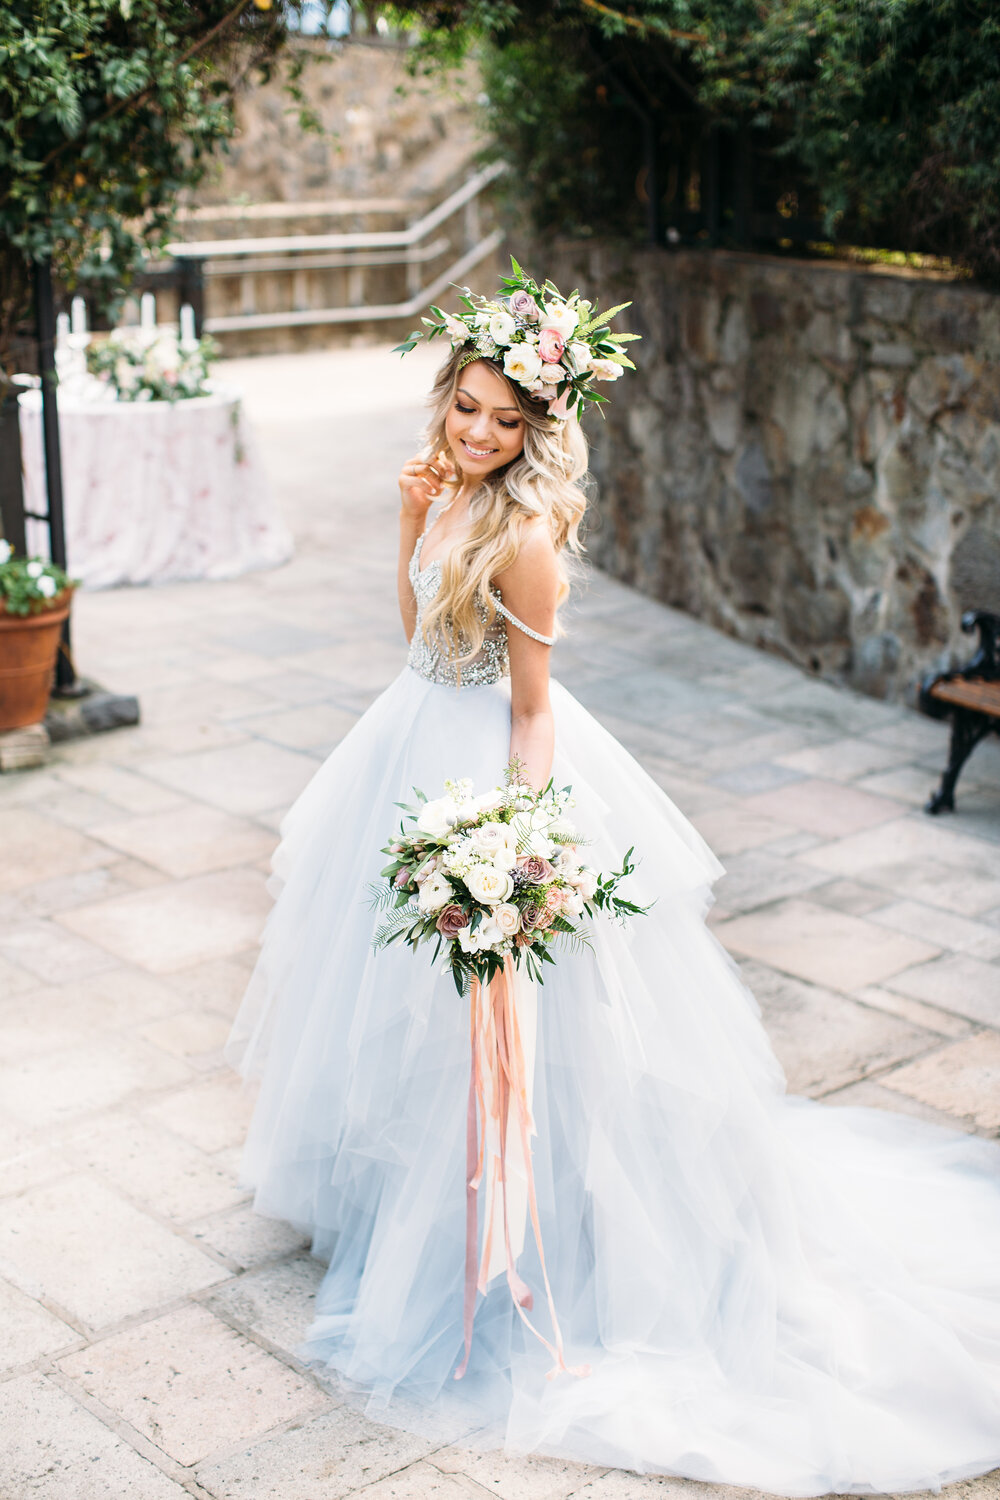 bride-happy-luxury-bridal-bouquet-blushes-whites-upscale-flowing-ribbon-headpiece-inspiration-hayley-paige-northern-california-florist-violette-fleurs-anna-perevertaylo.jpg